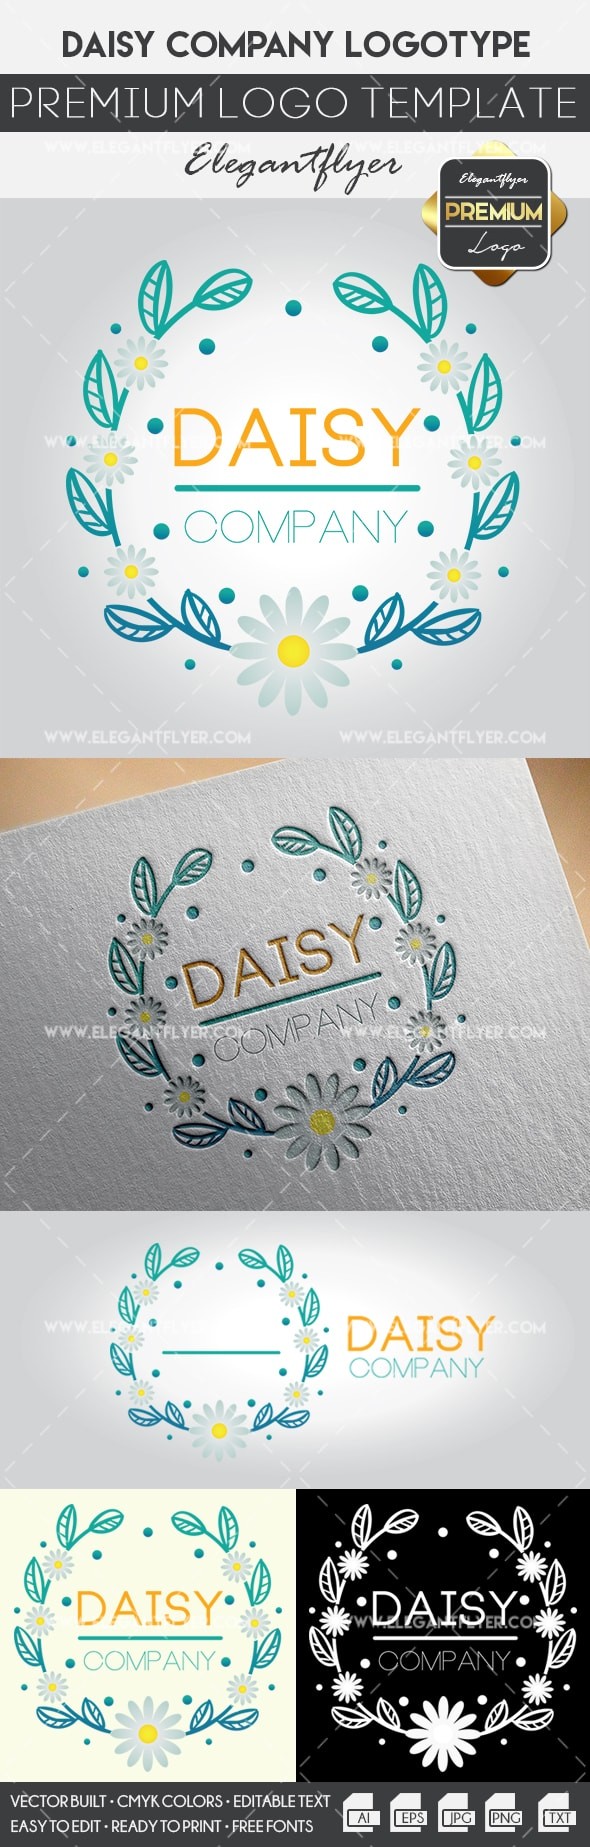 Empresa Daisy by ElegantFlyer